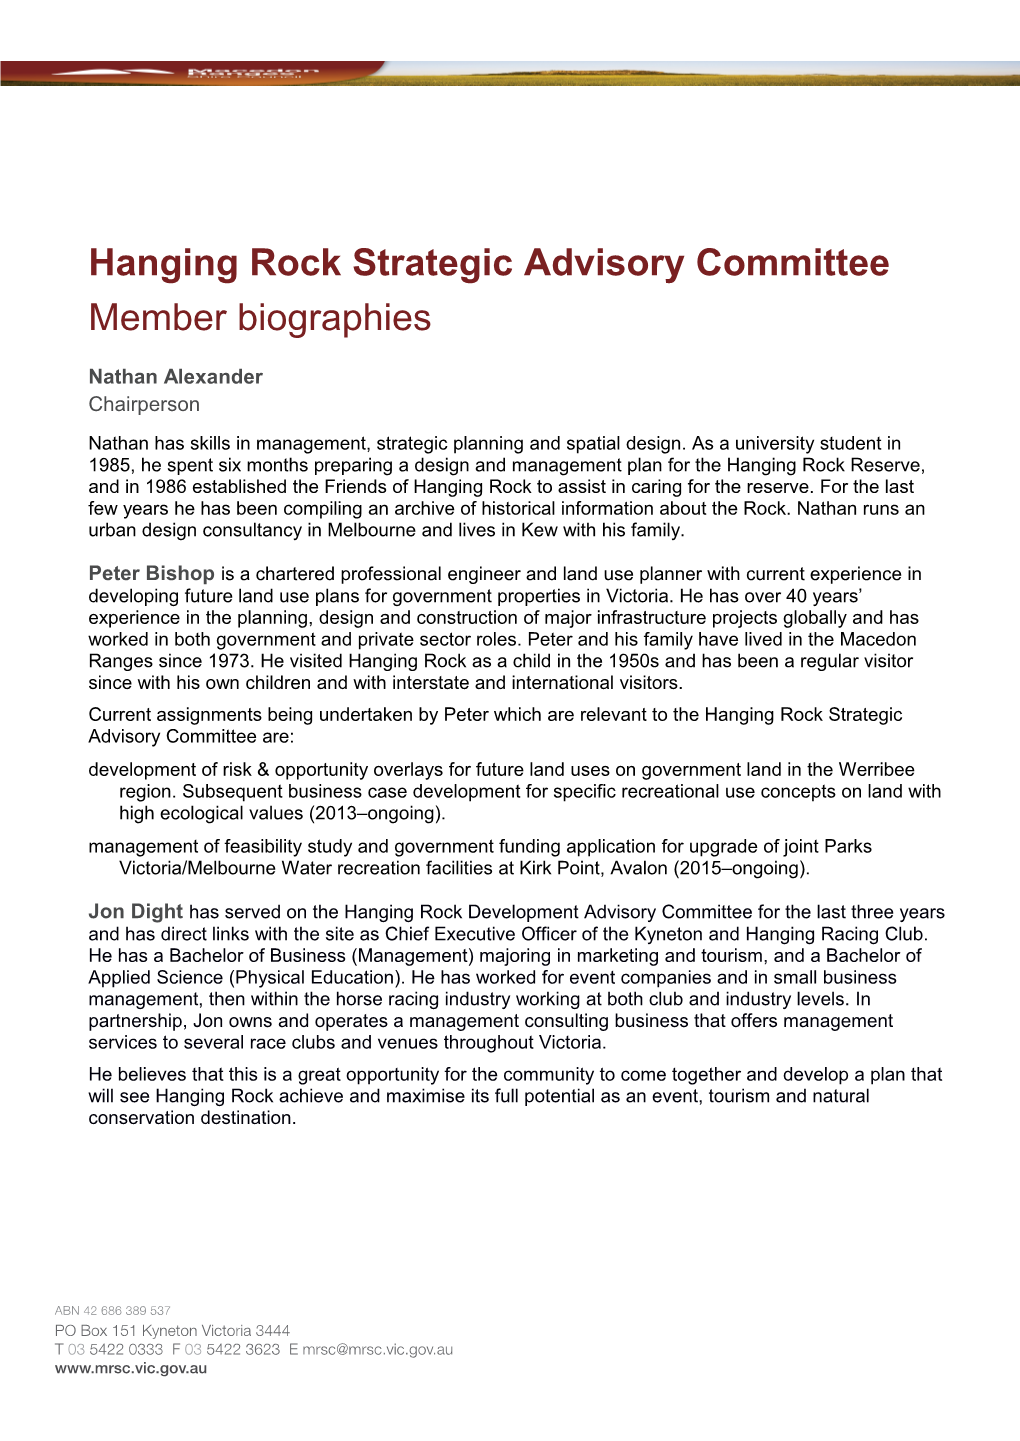 Hanging Rock Strategic Advisory Committee Member Biographies